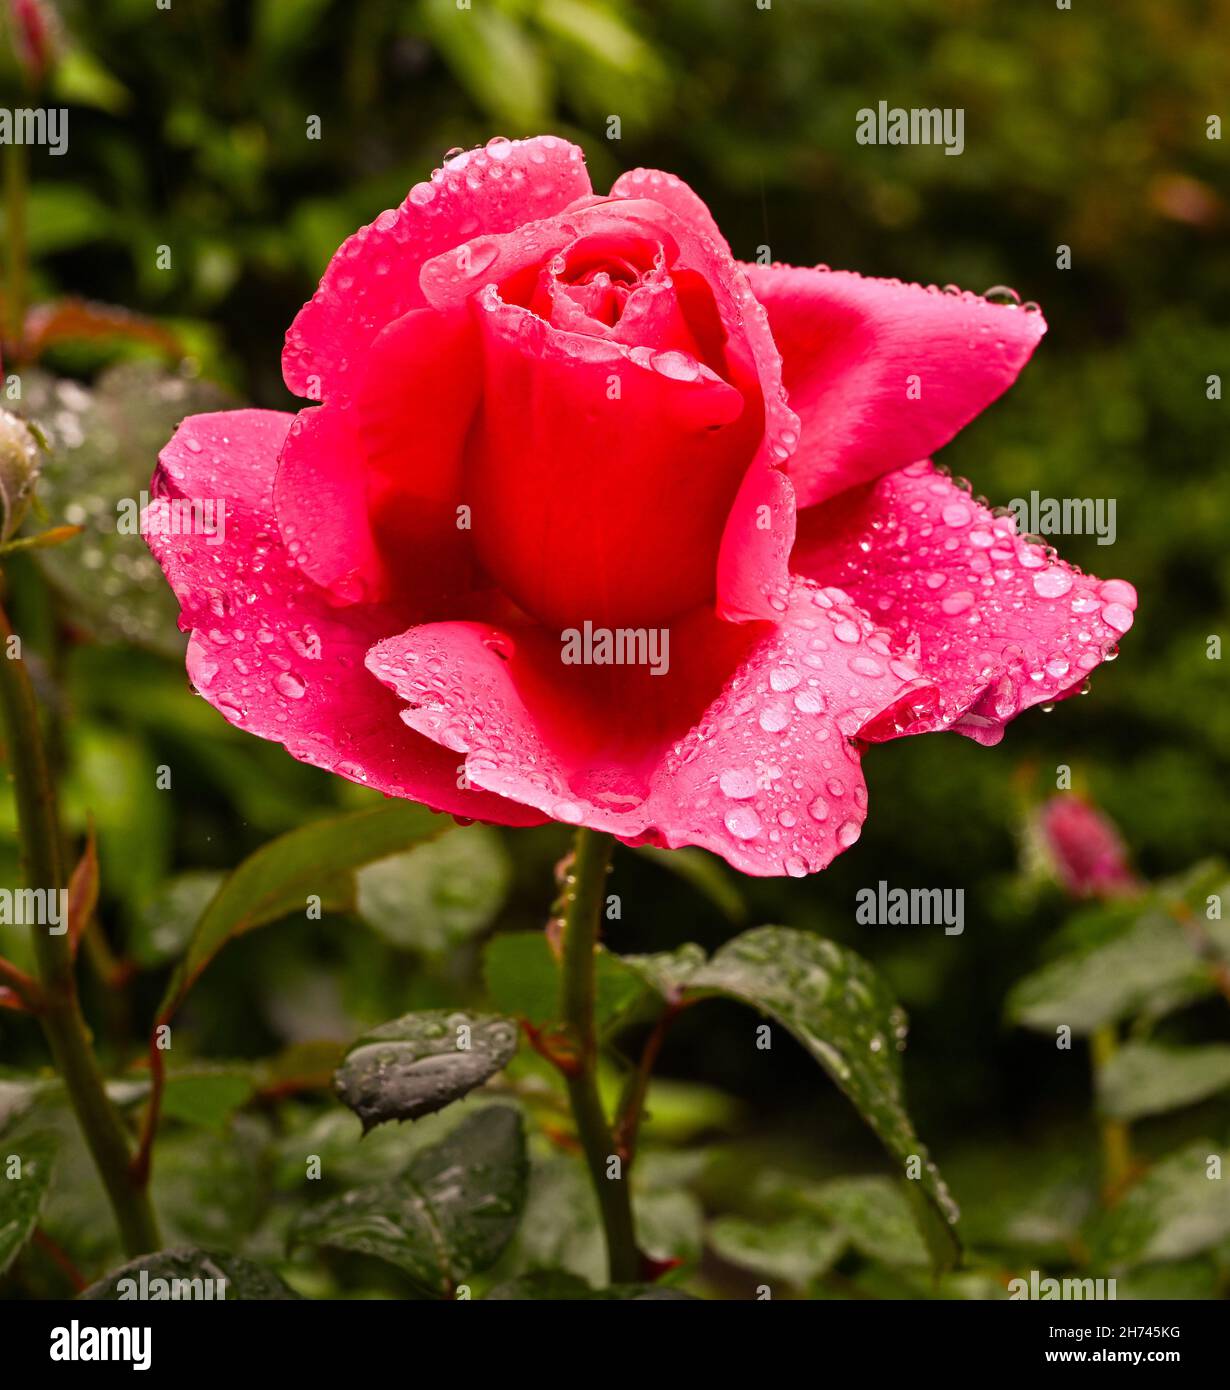 Belle rose parfumée nommée Elbflorenz avec gouttes d'eau.Jardin botanique, KIT Karlsruhe, Allemagne, Europe Banque D'Images